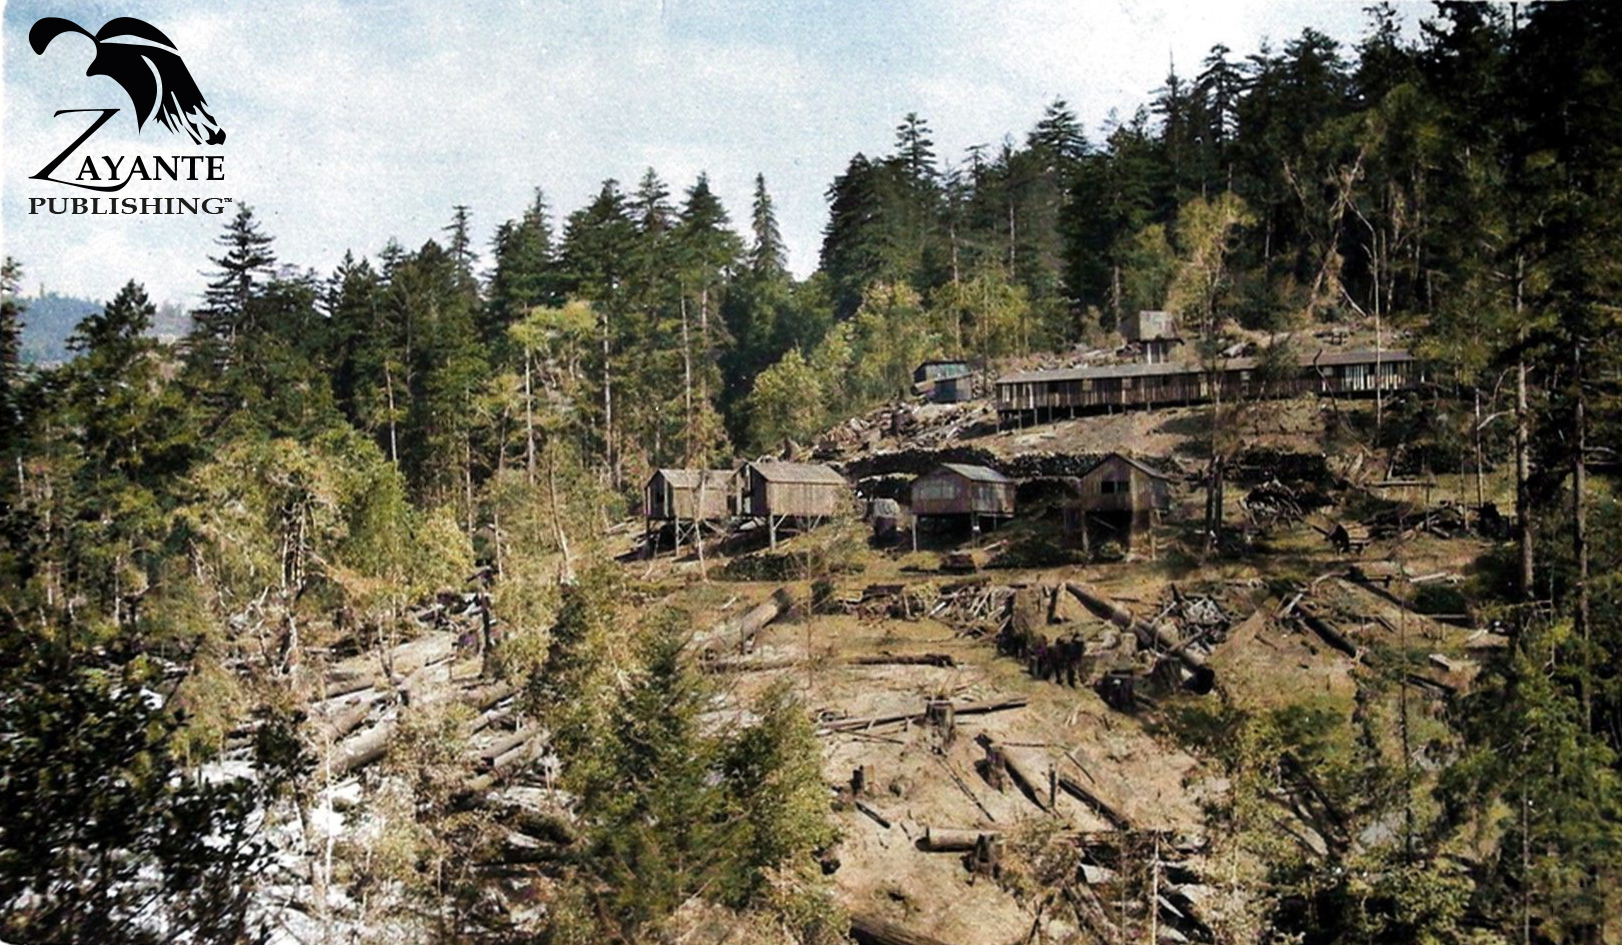 Hoffman's Camp—Loma Prieta Camp 5, ca 1920